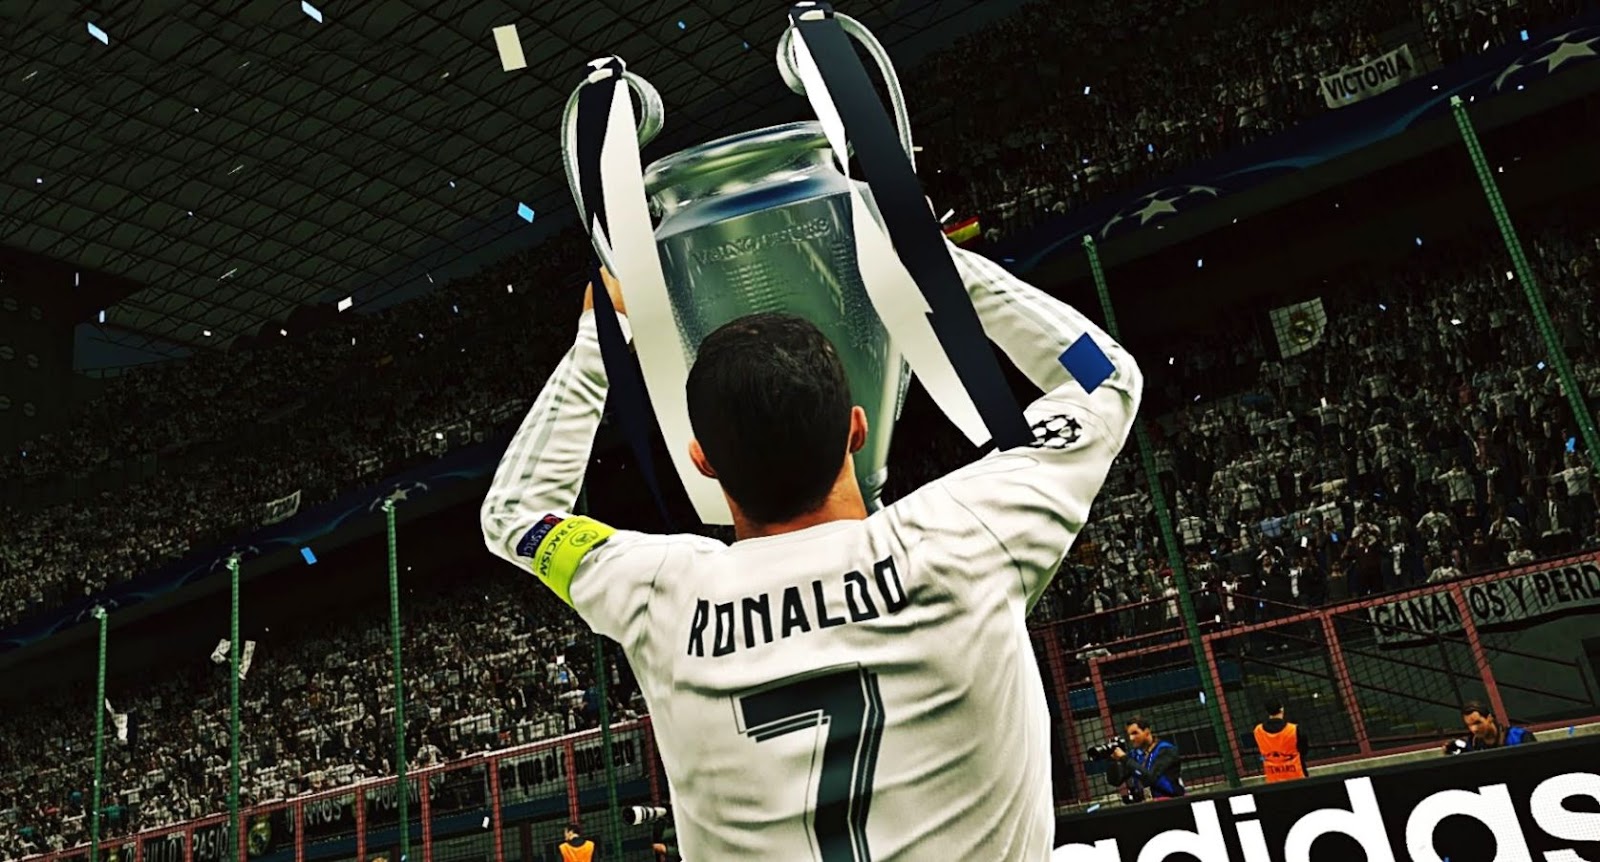 2016 Real Madrid Fc Championship Hd | Image Wallpaper ...